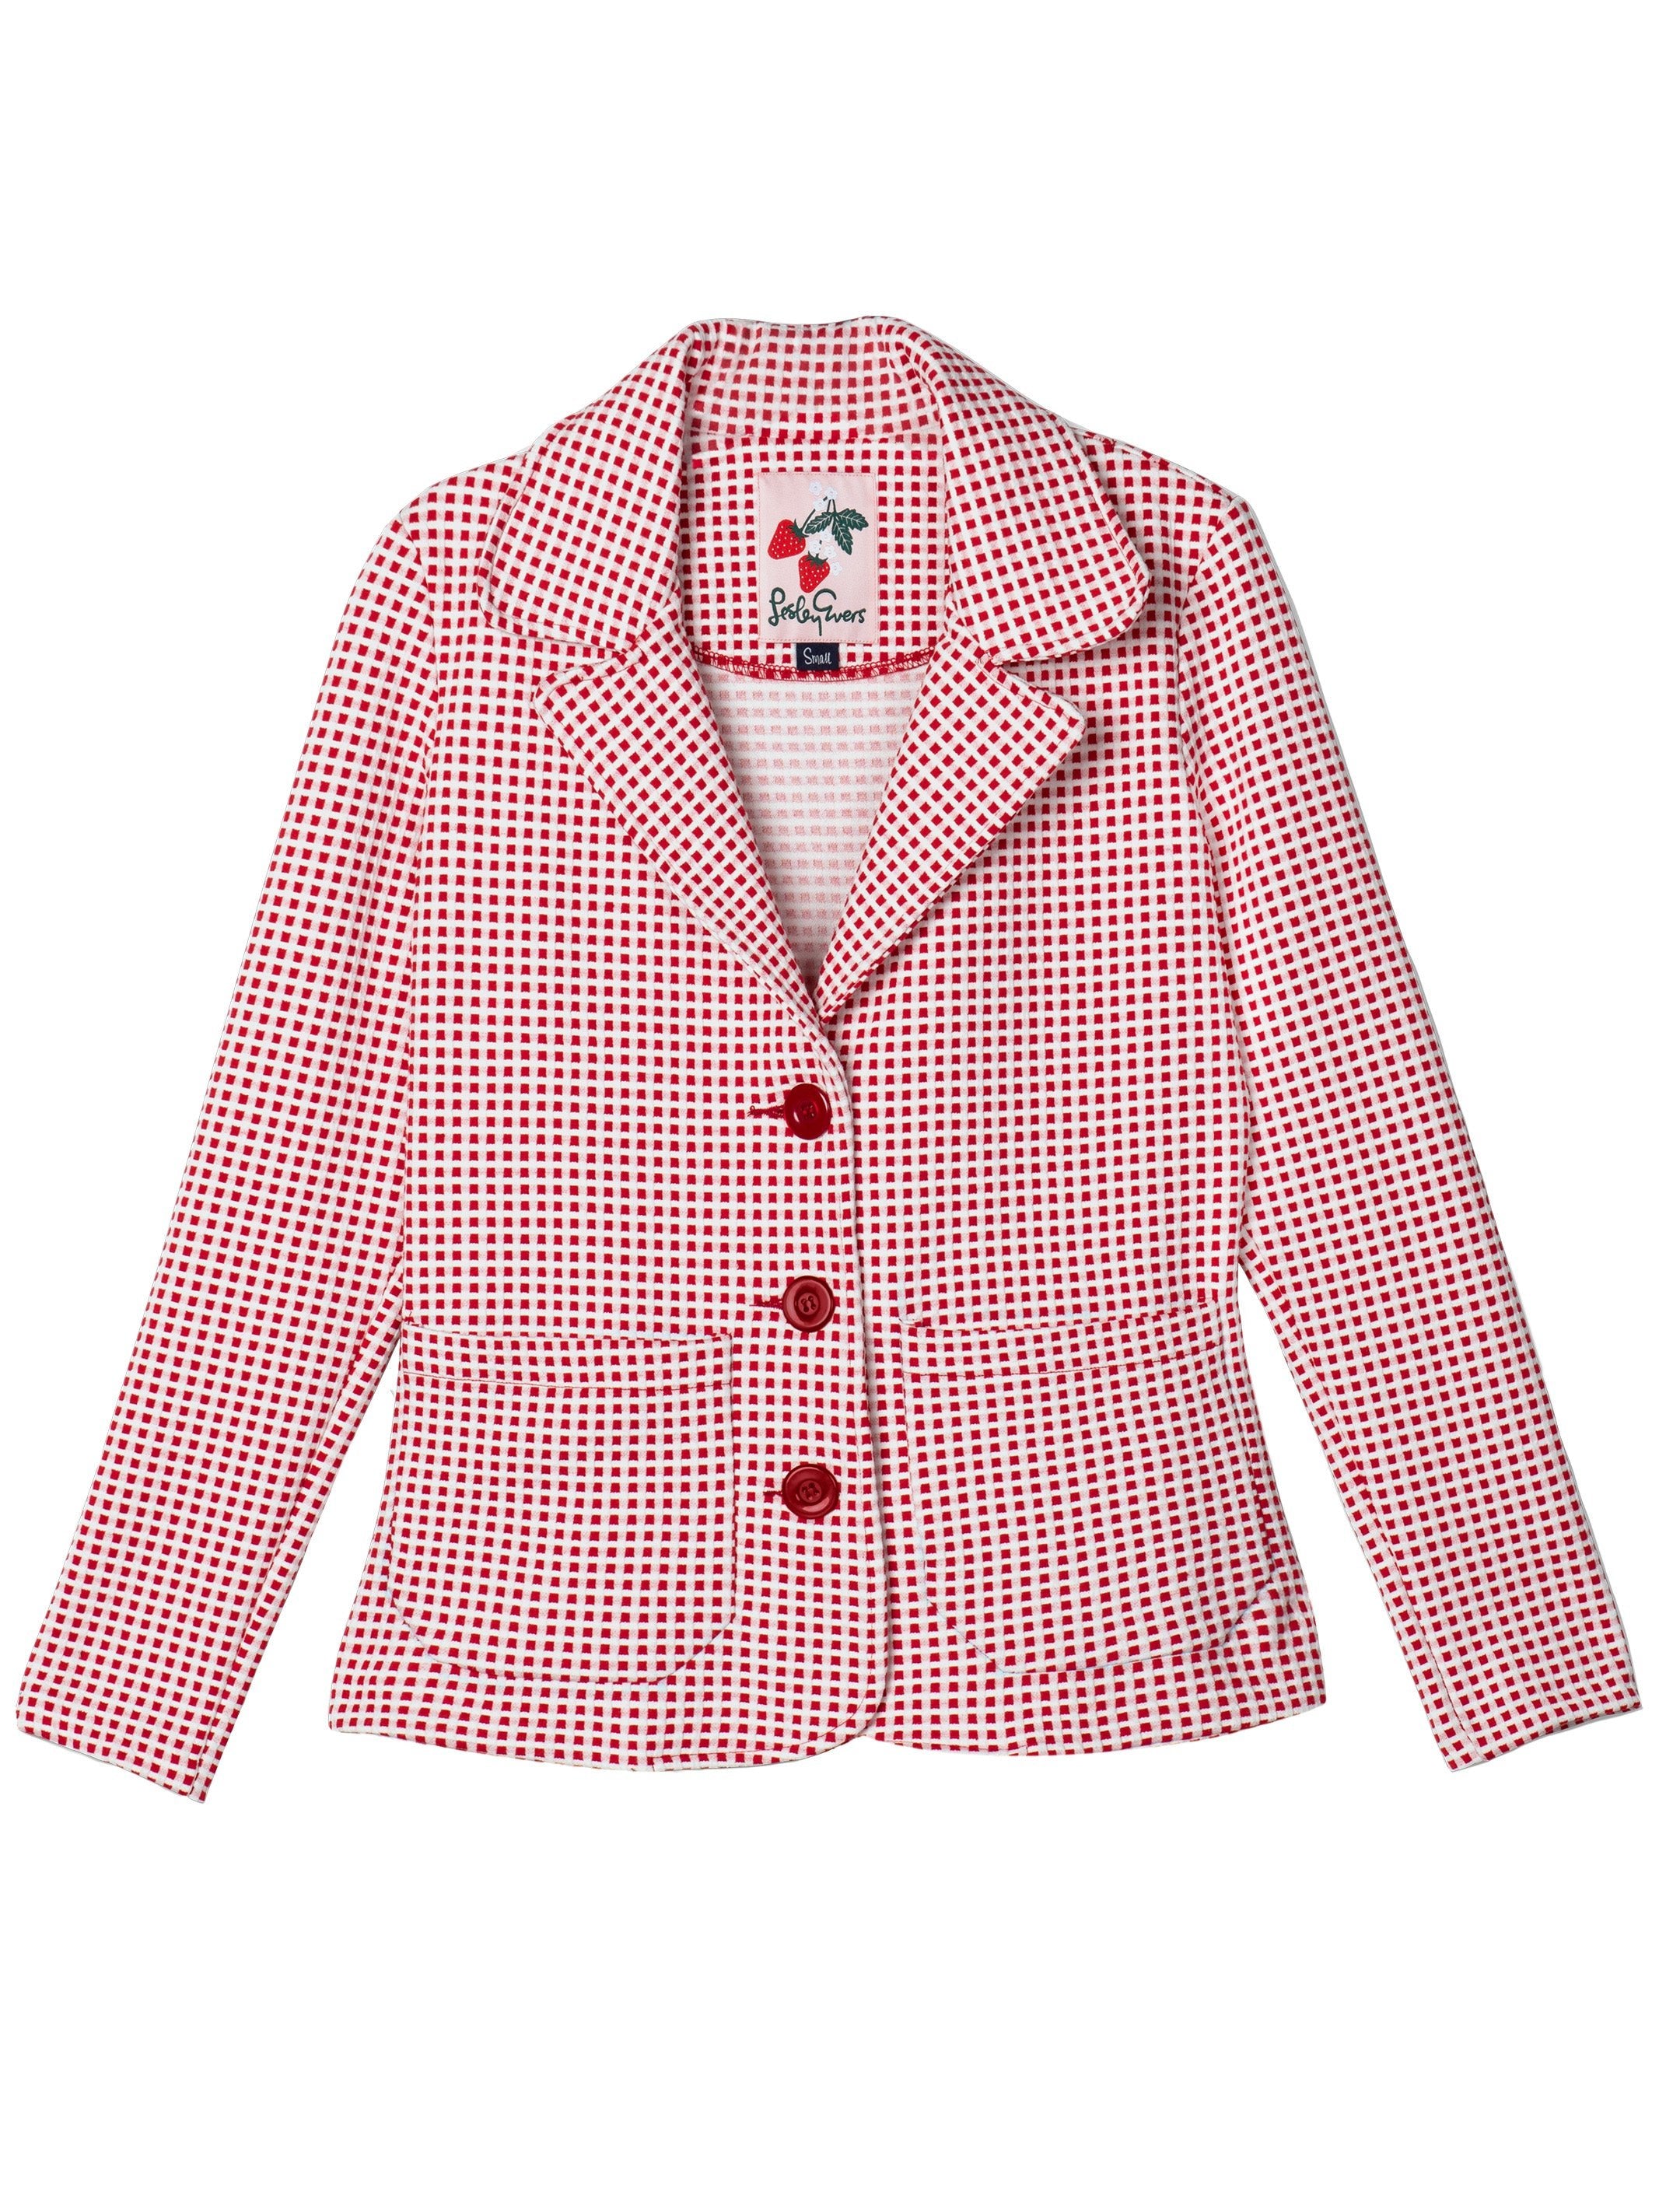 BLAIR blazer Red Jacquard - Lesley Evers-blazer-cord suit-corduroy